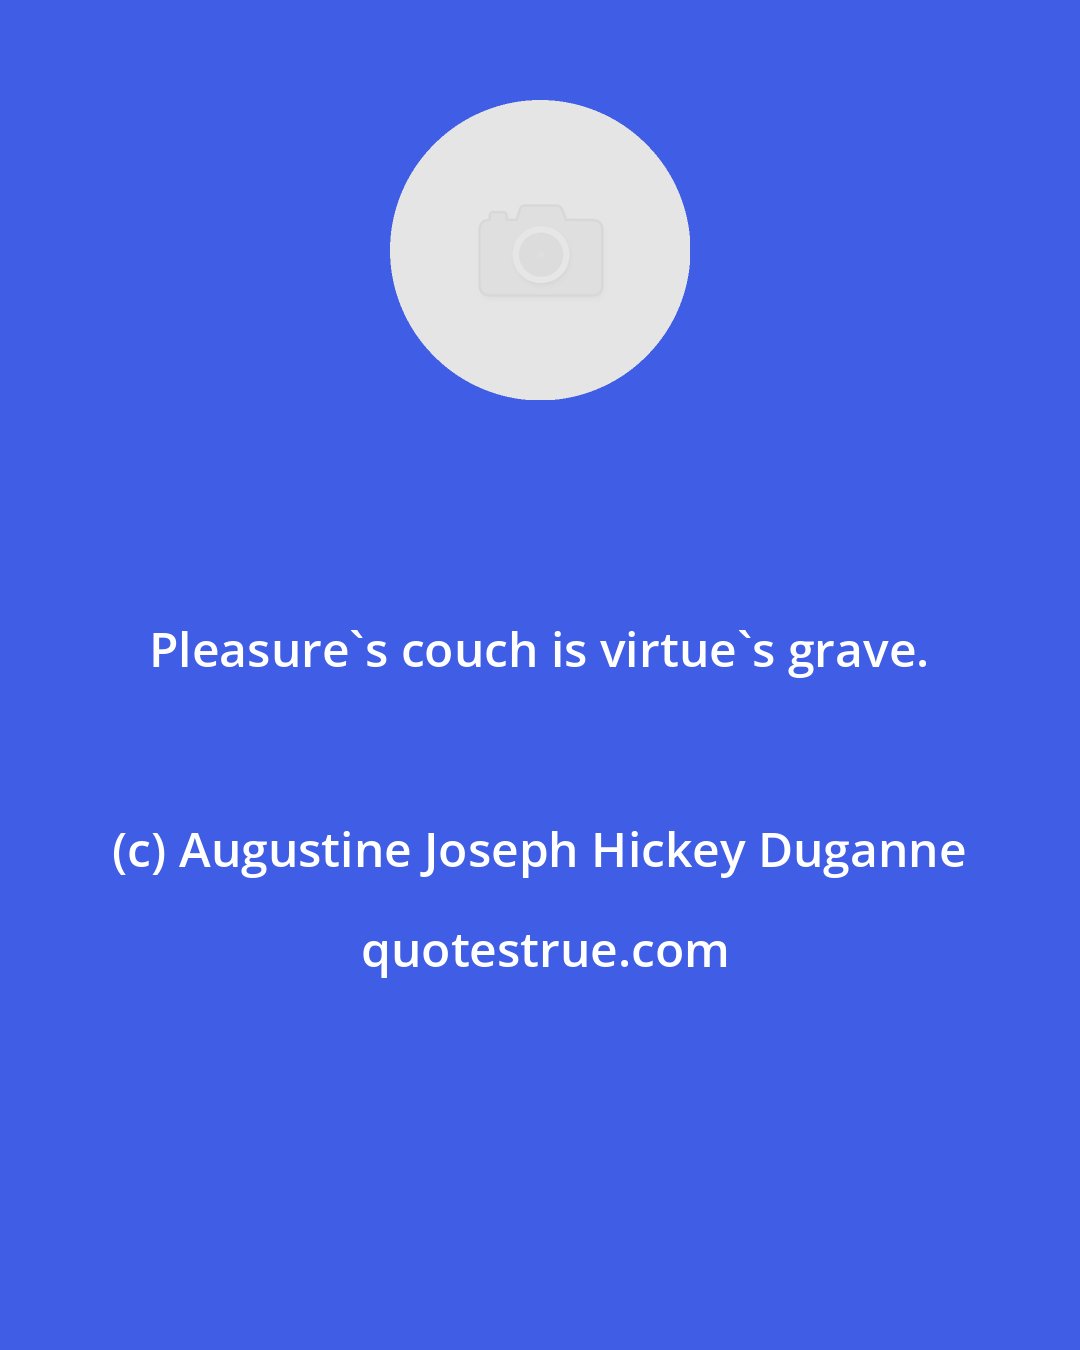 Augustine Joseph Hickey Duganne: Pleasure's couch is virtue's grave.